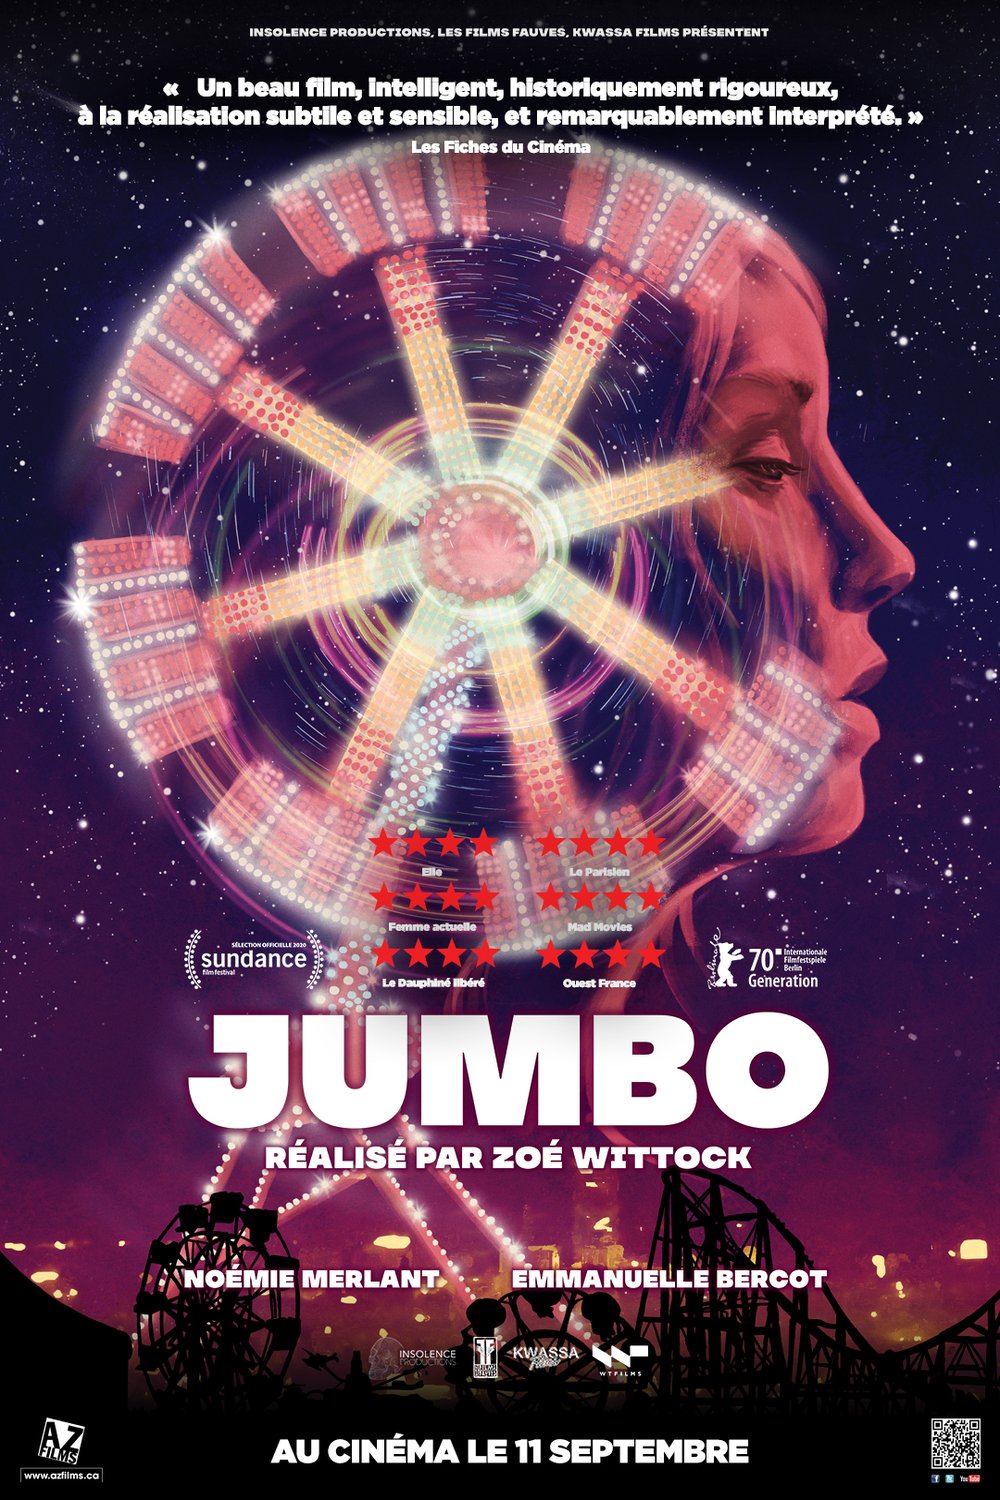 Poster of the movie Jumbo